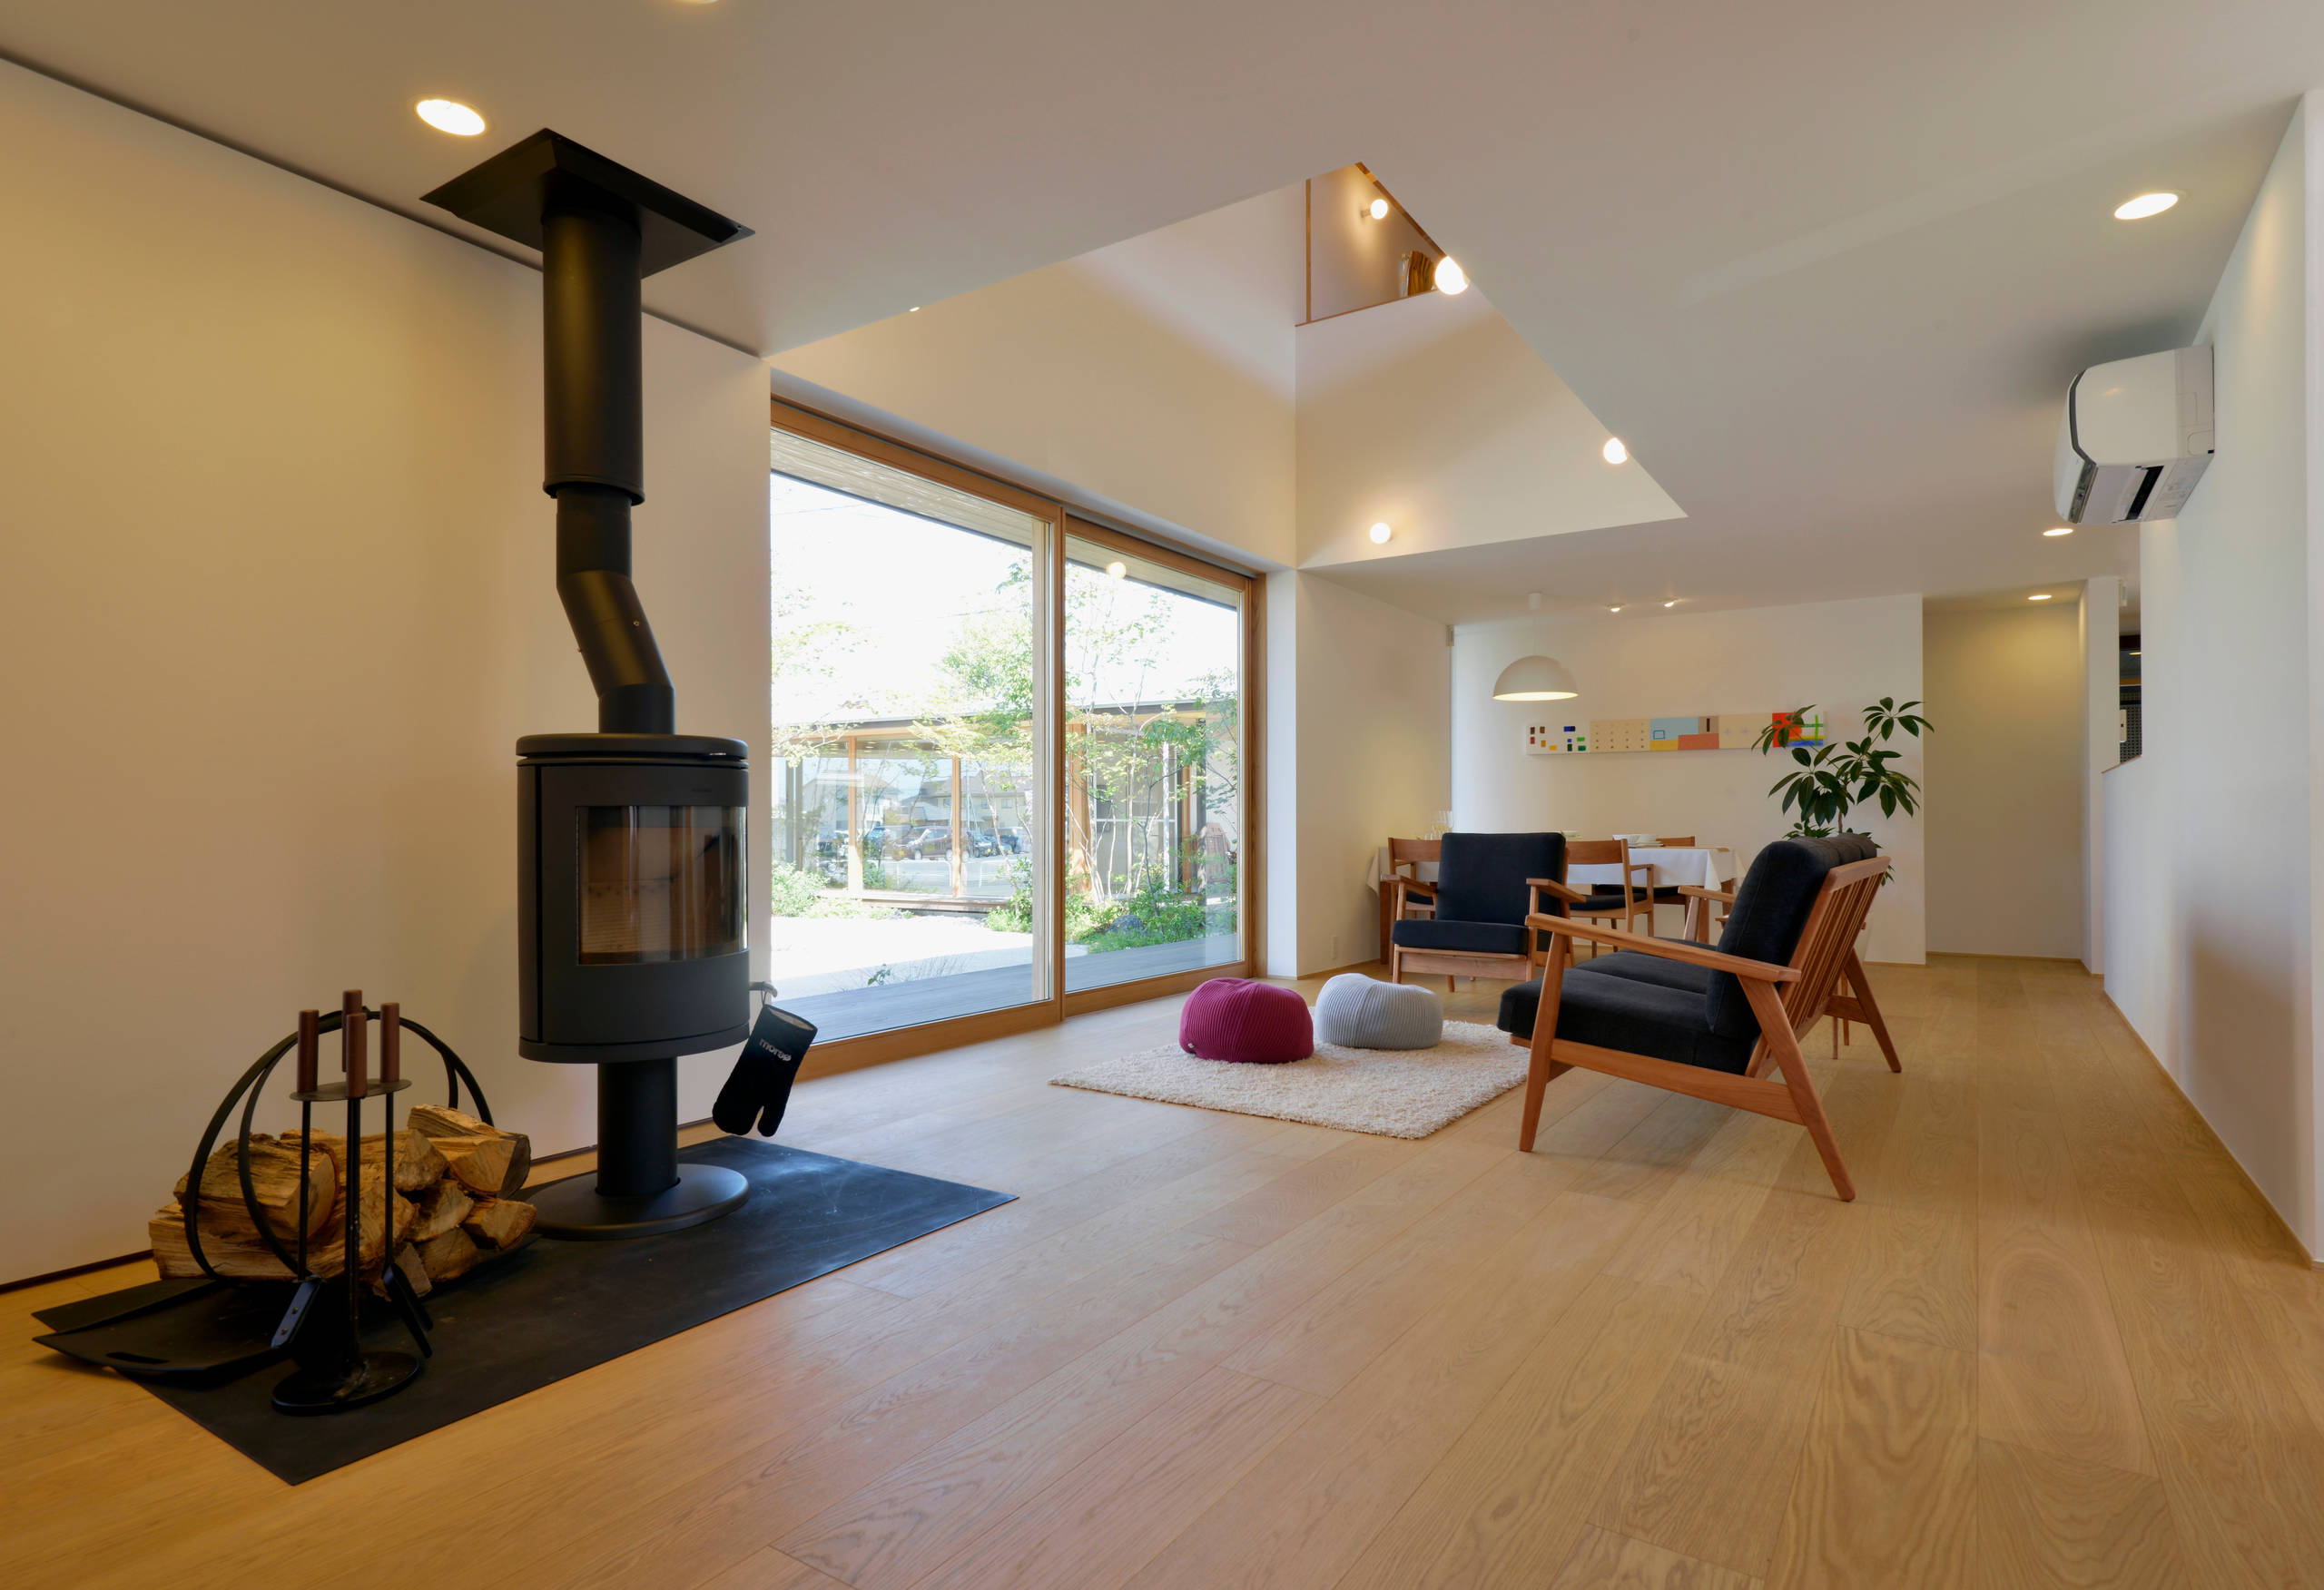 15 Beautiful Modern Living iRoomi Designs Your Home 